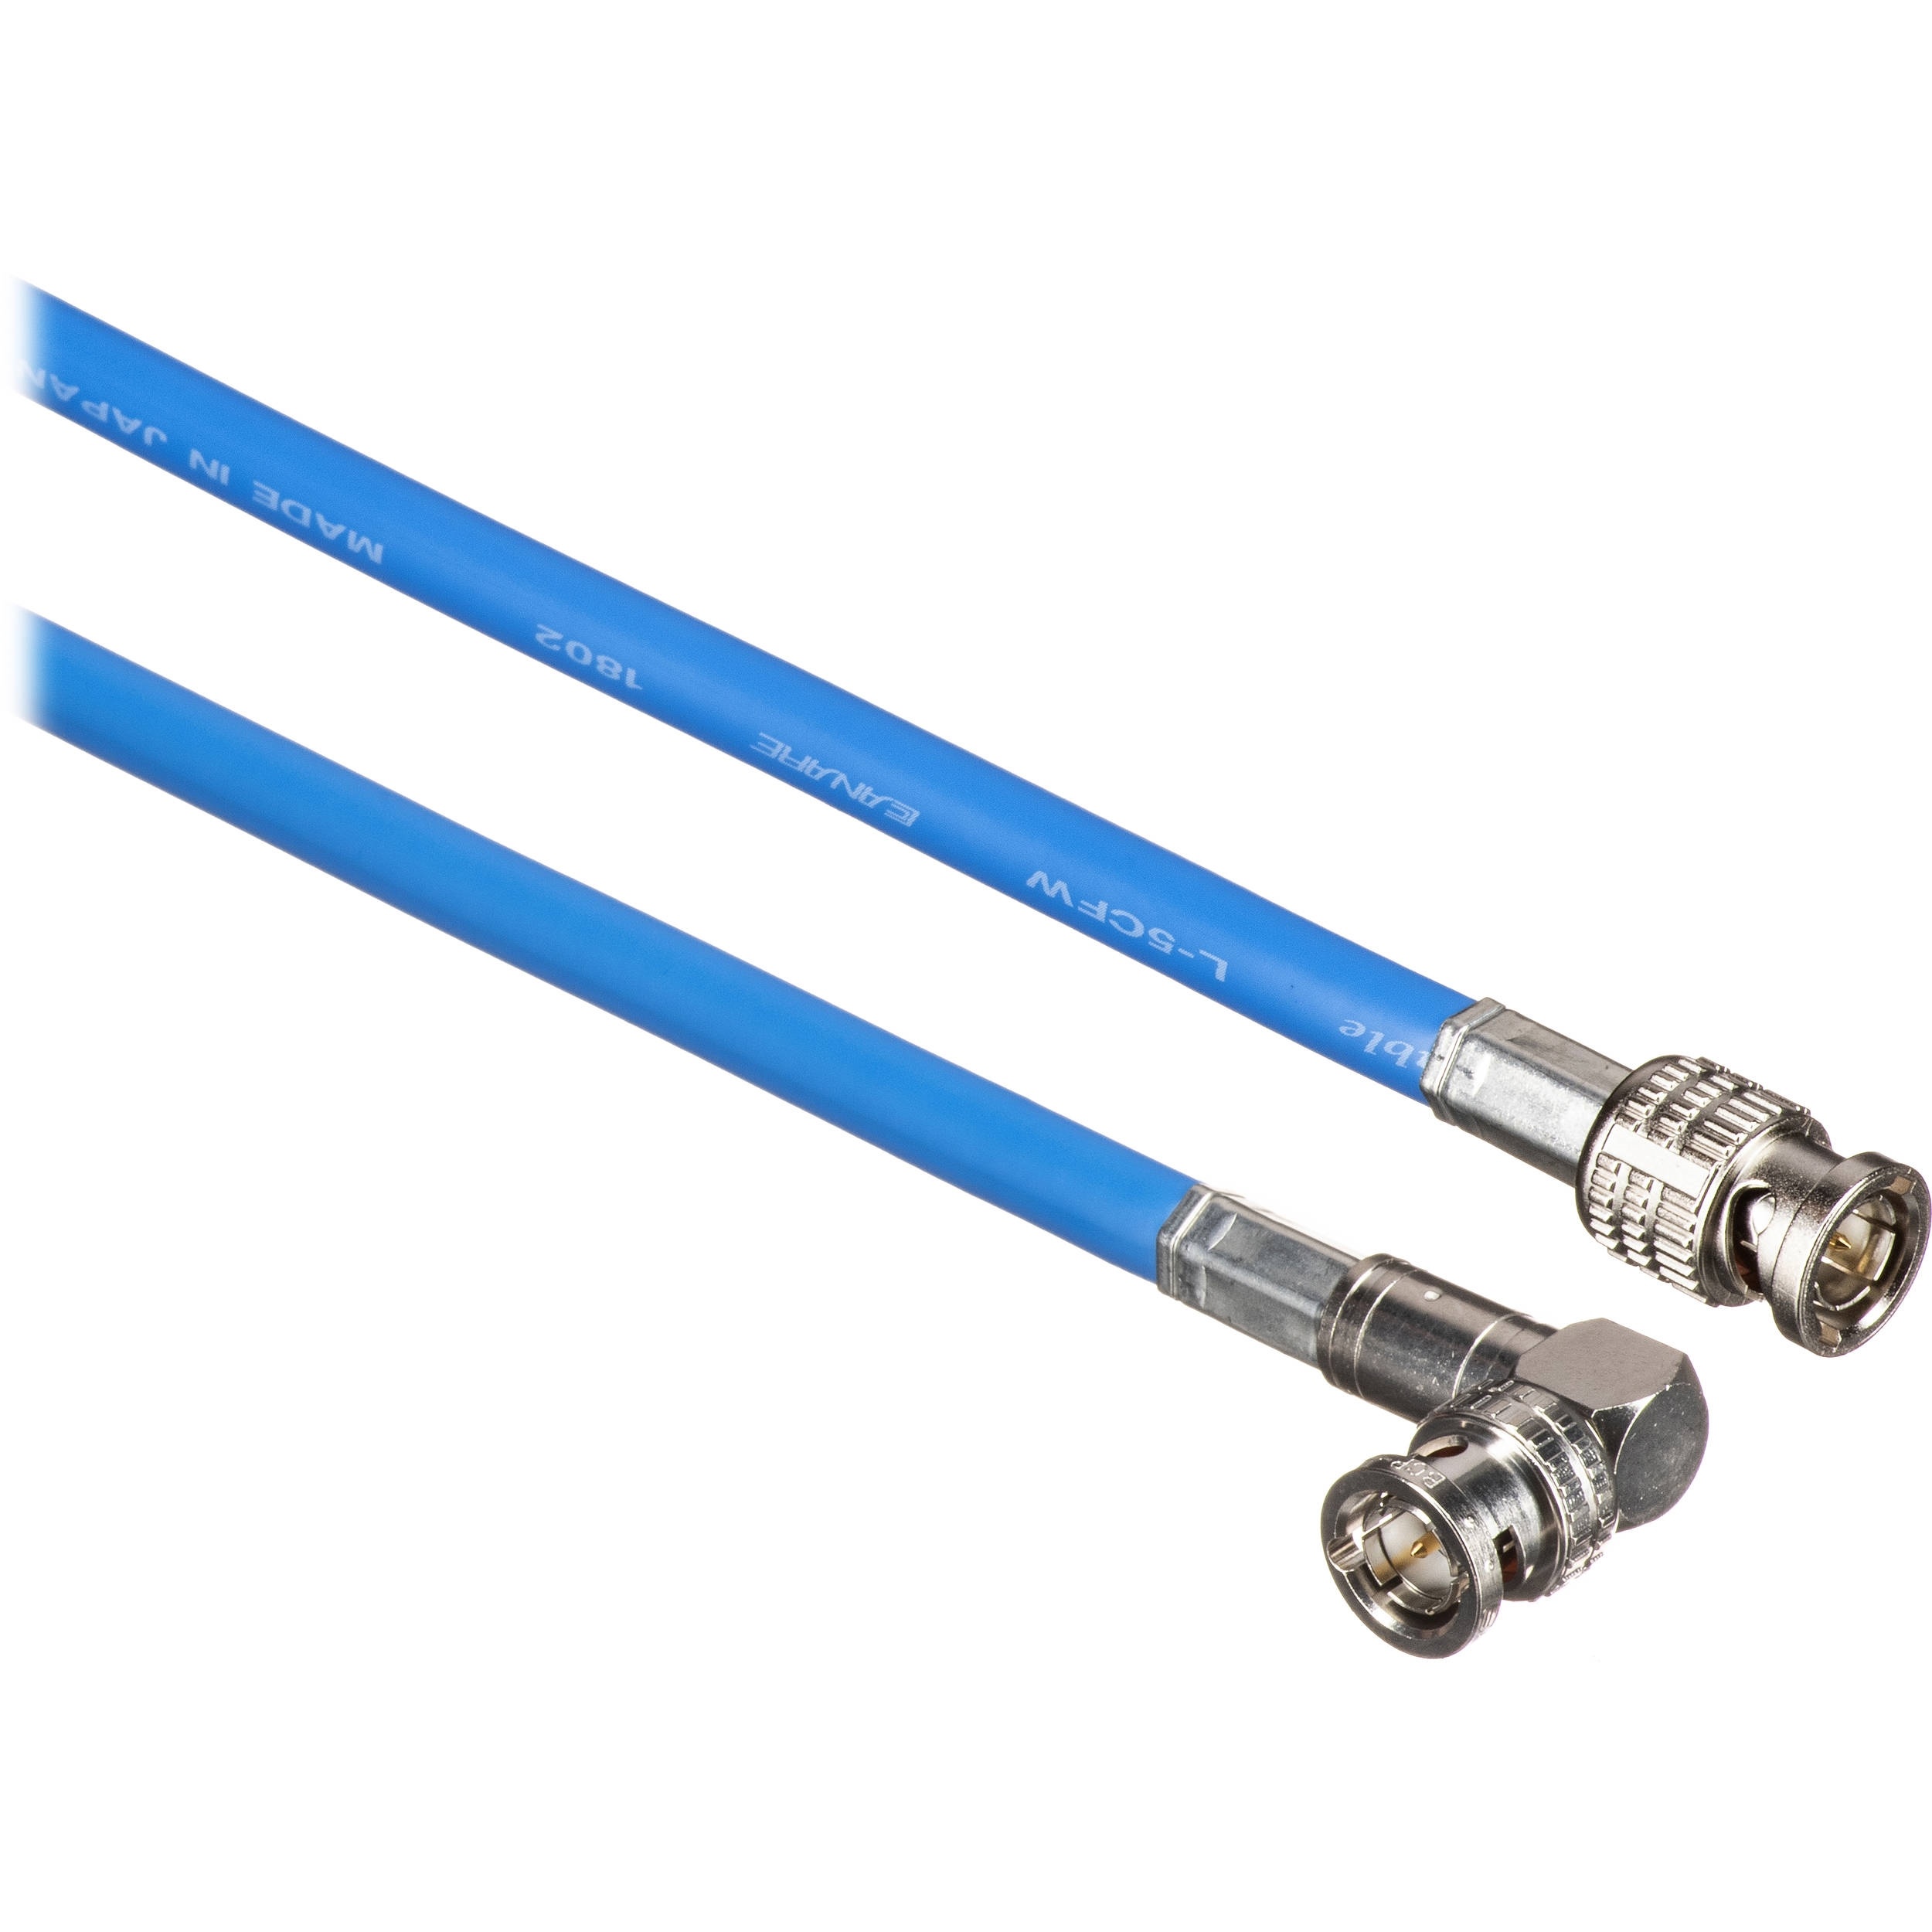 Canare Male to Right Angle Male HD-SDI Video Cable (Blue, 100')